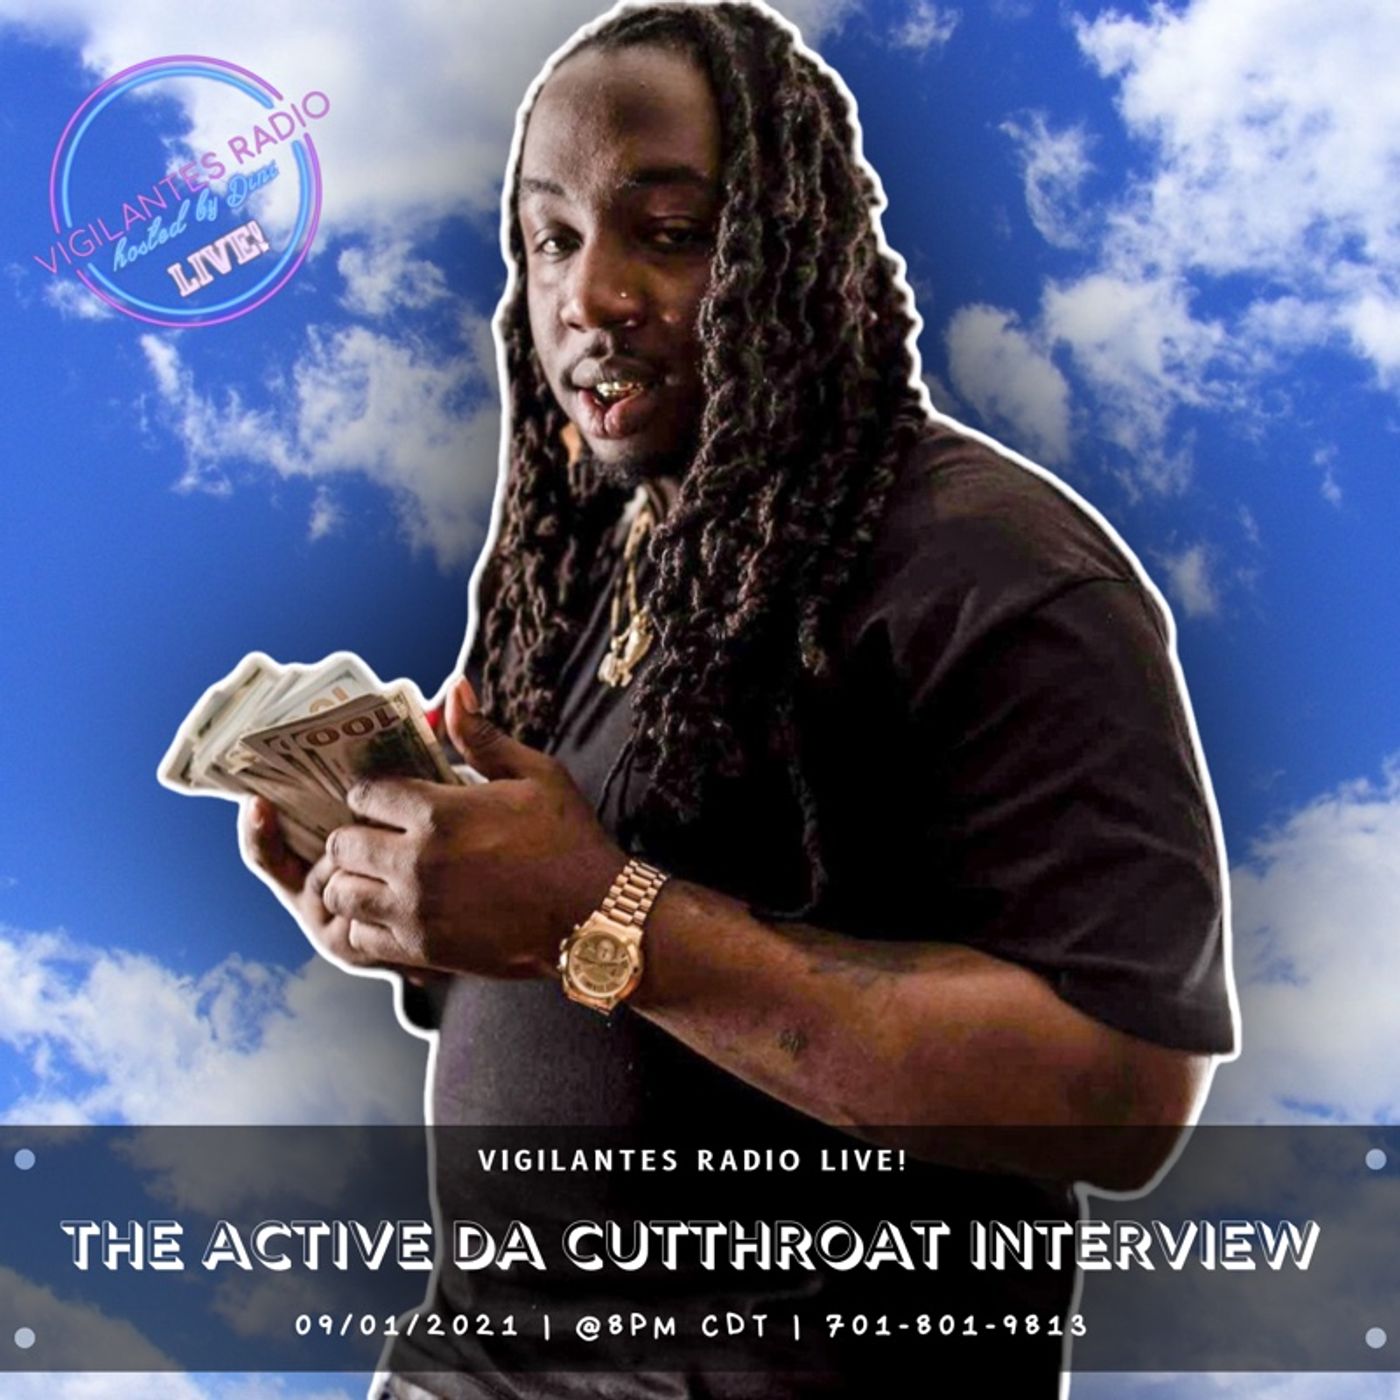 The Active Da Cutthroat Interview.